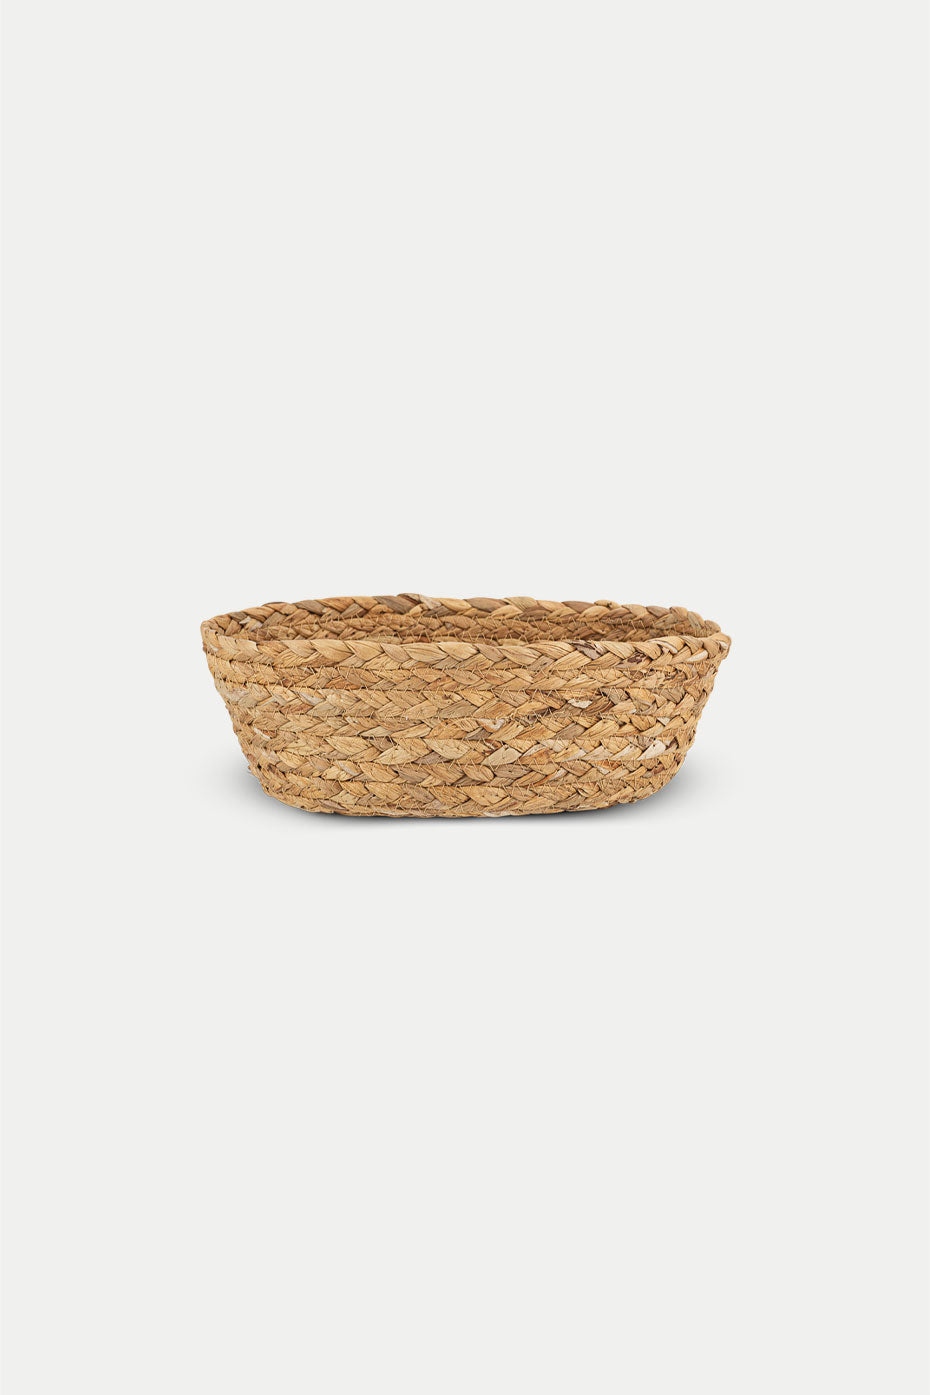 Natural Giti Bread Basket